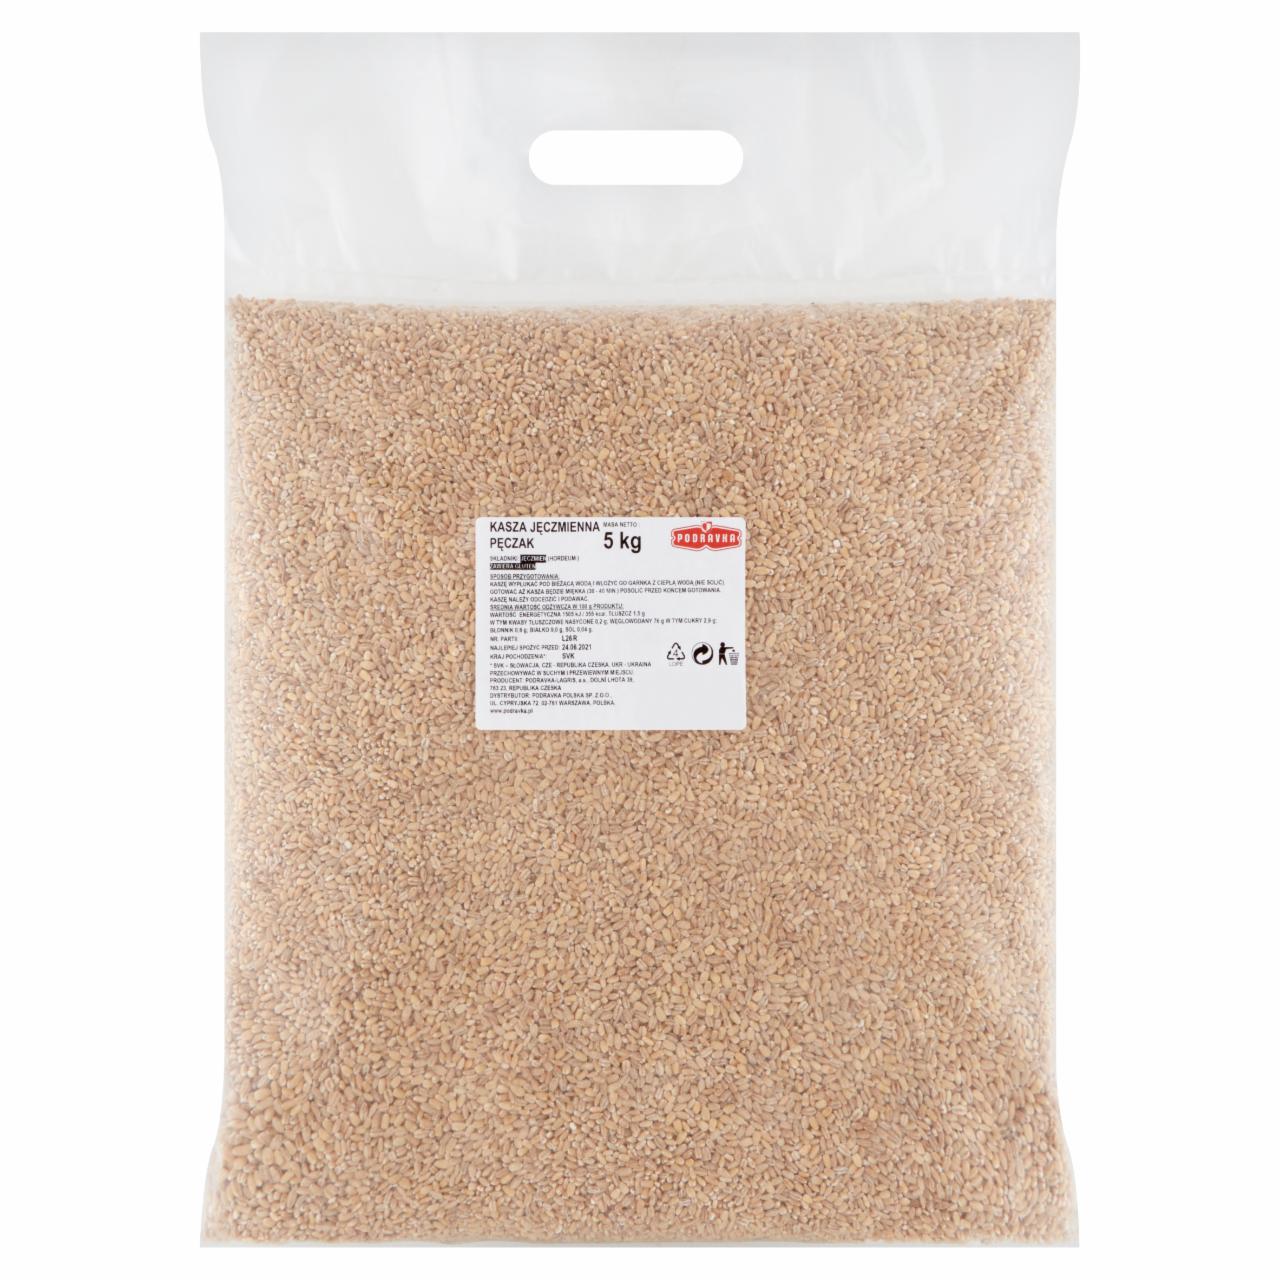 Photo - Podravka Hulled Barley Groats 5 kg